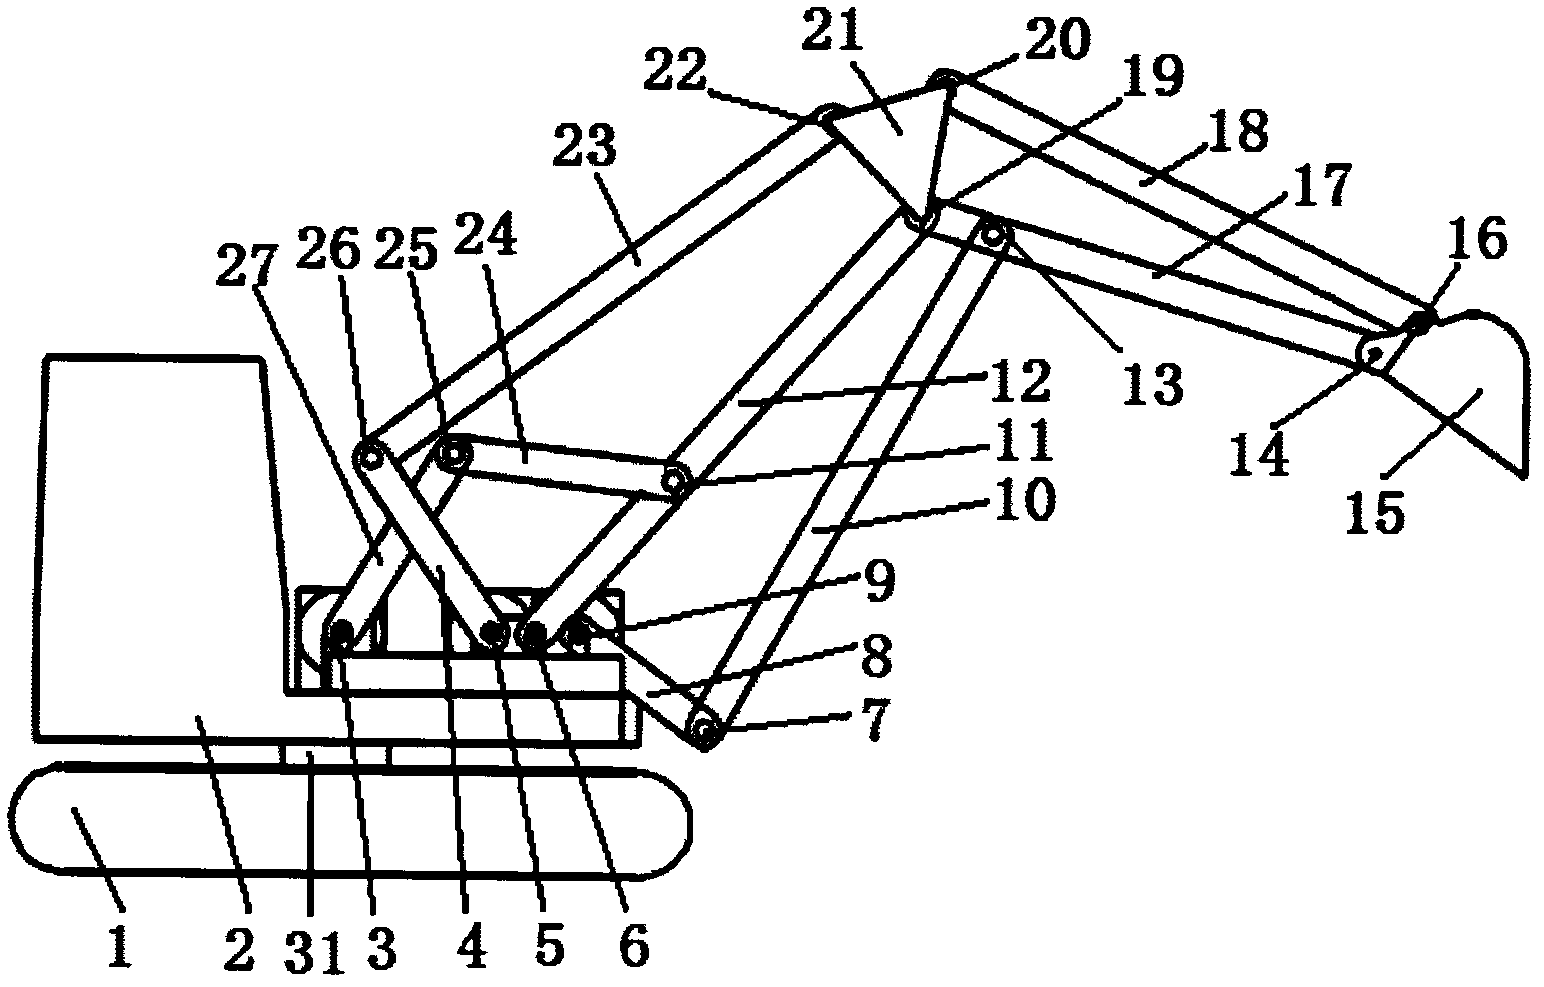 3-dof (three degrees of freedom) controllable mechanism type excavator